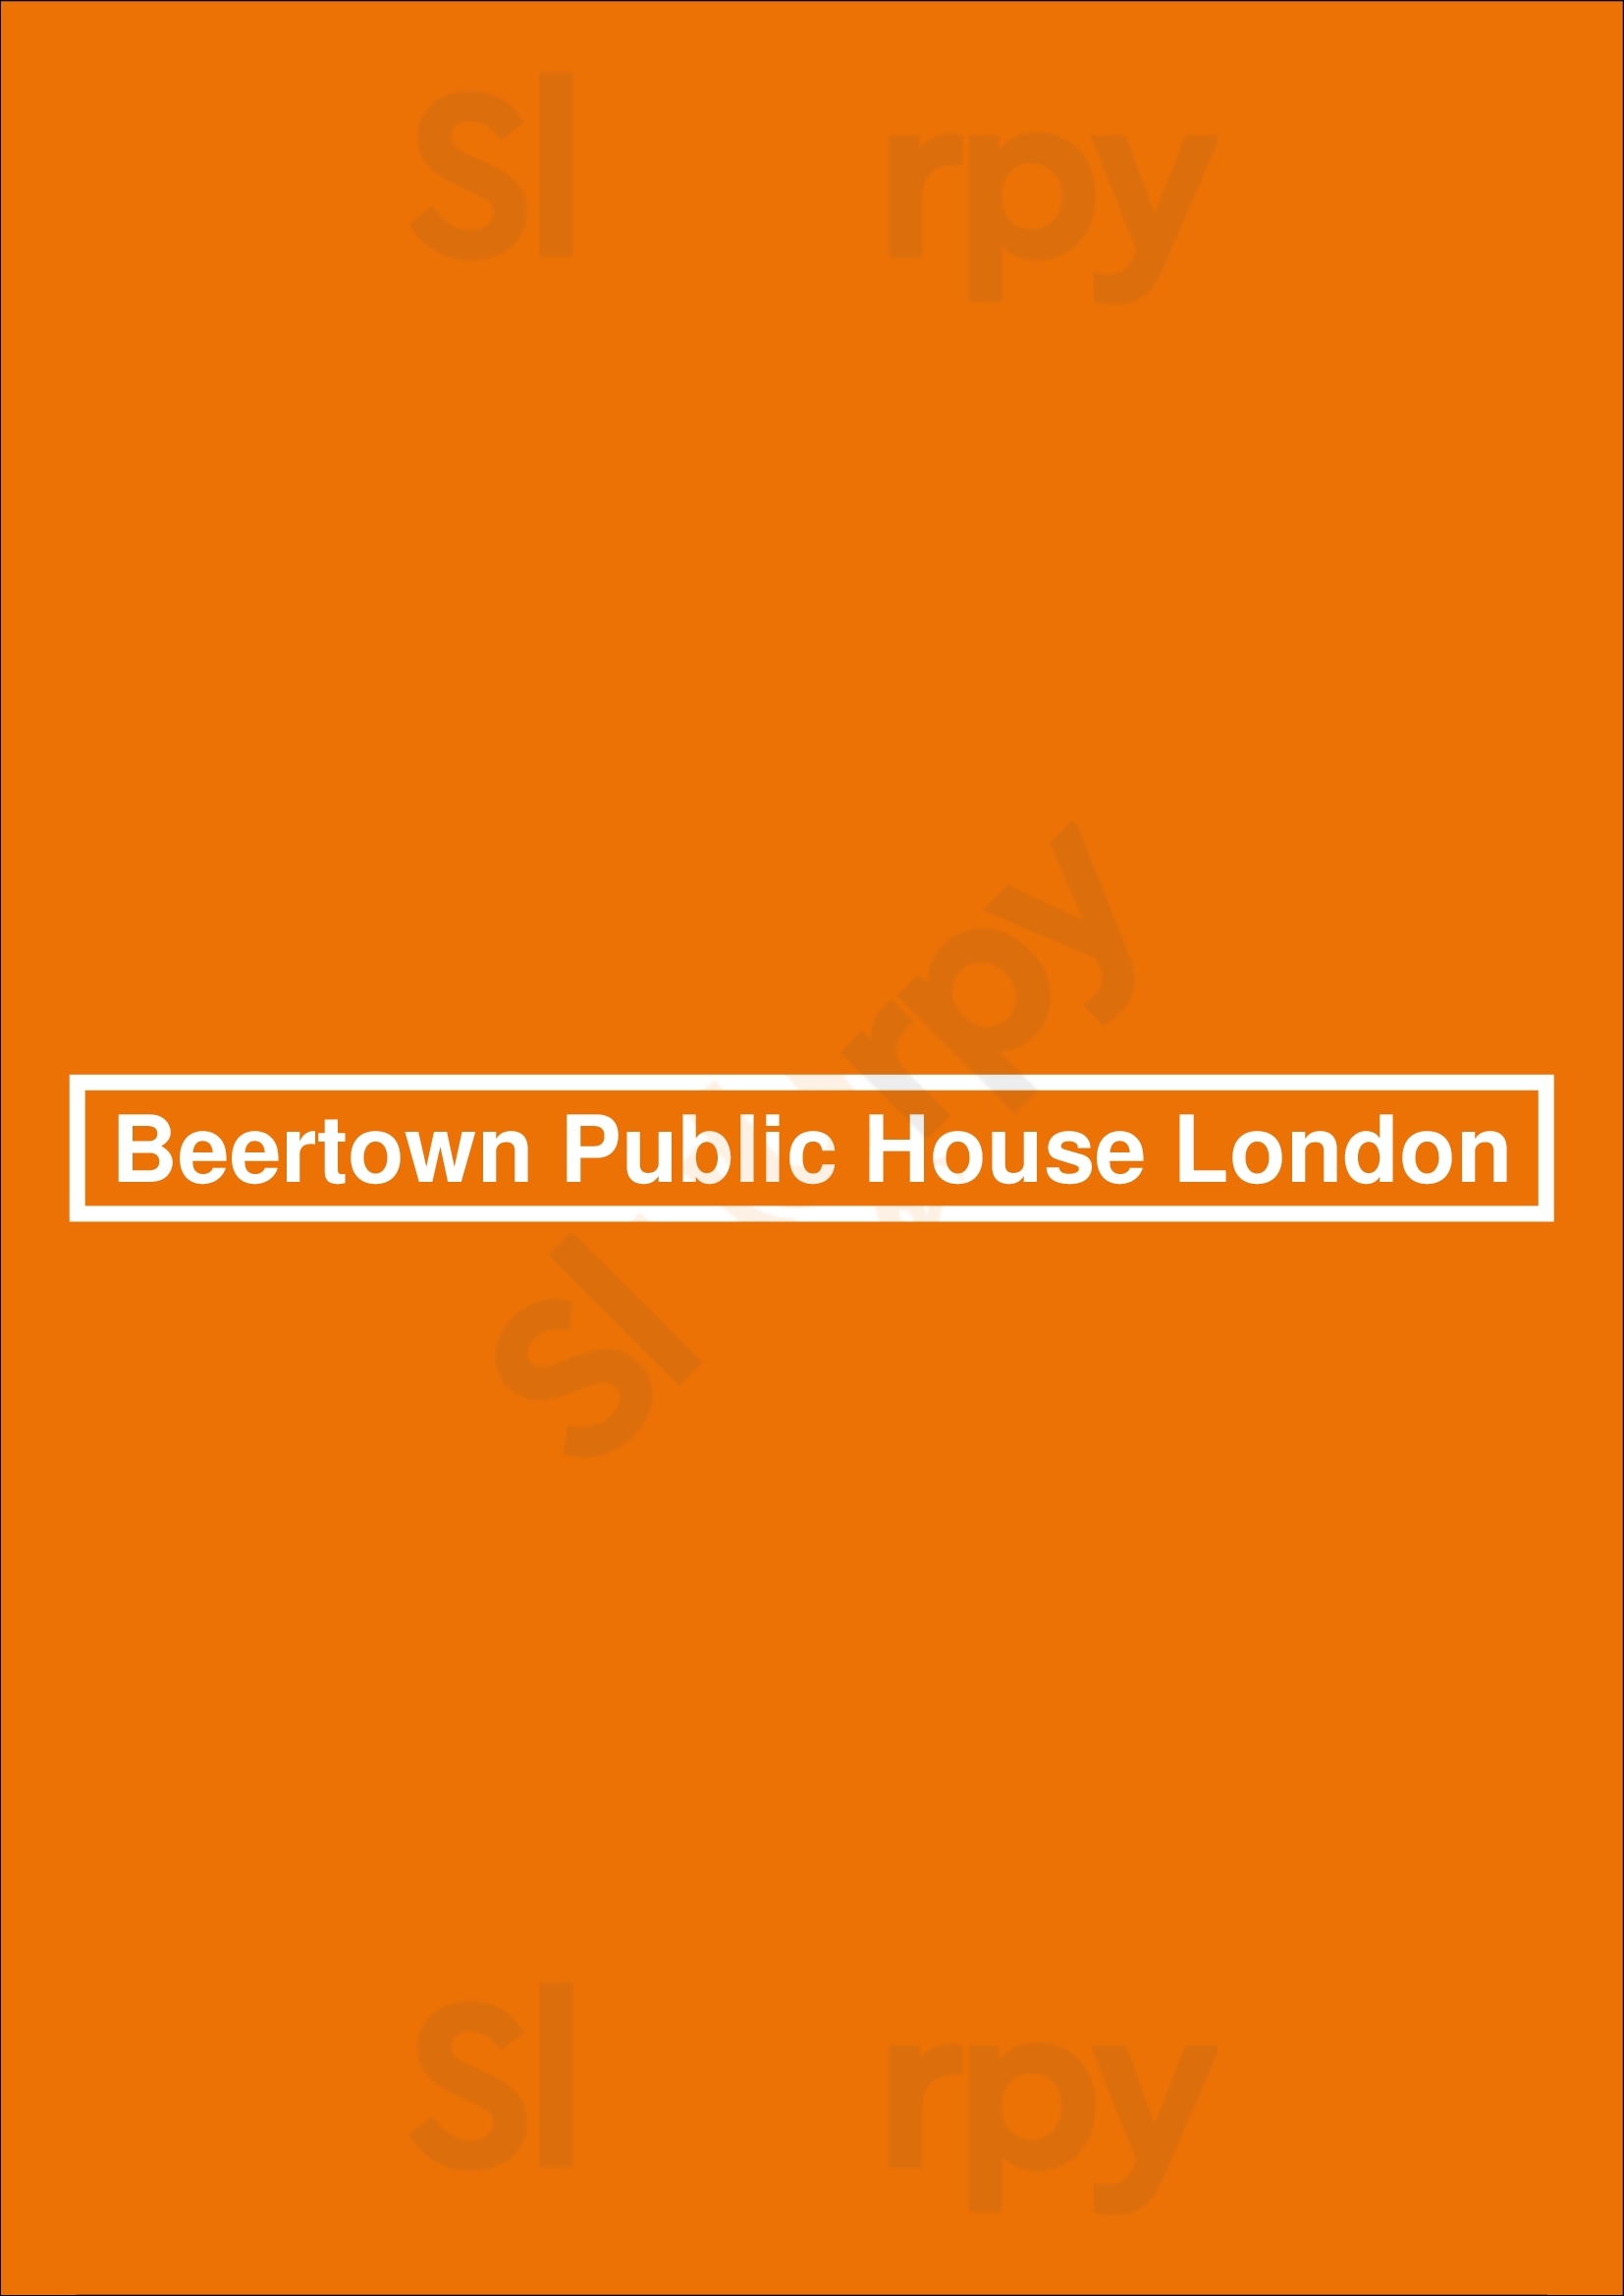 Beertown Public House London London Menu - 1